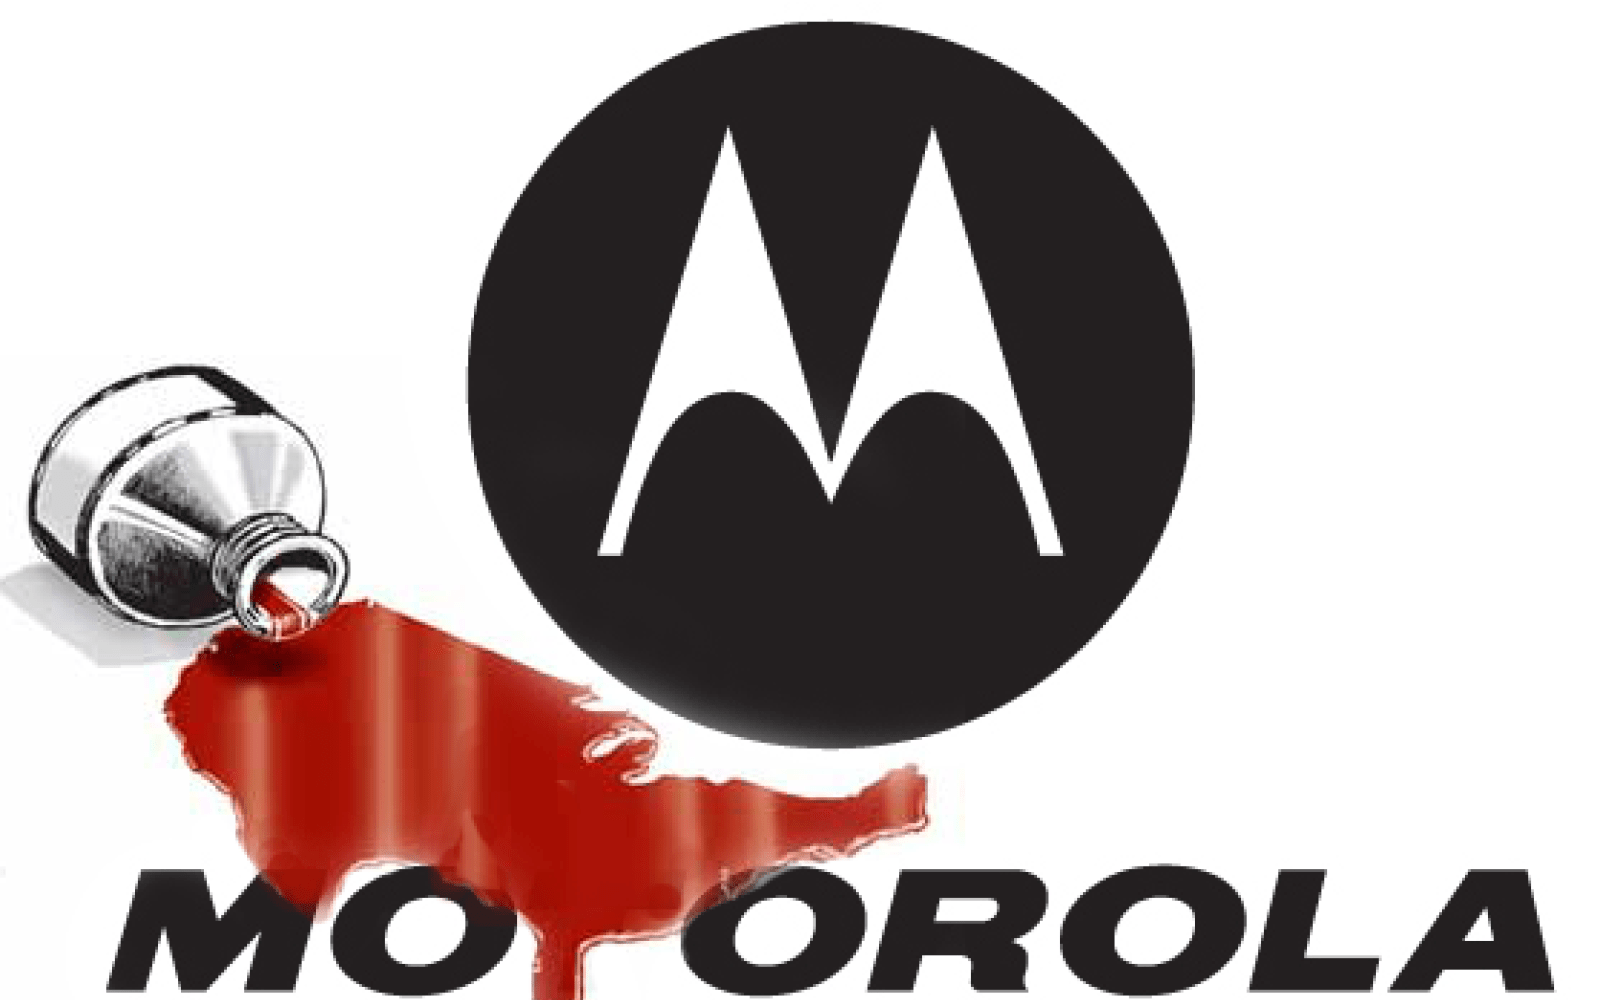 New Motorola Mobility Logo - Motorola Mobility Q4 2011 results: Loses $80M, ships 10.5M phones